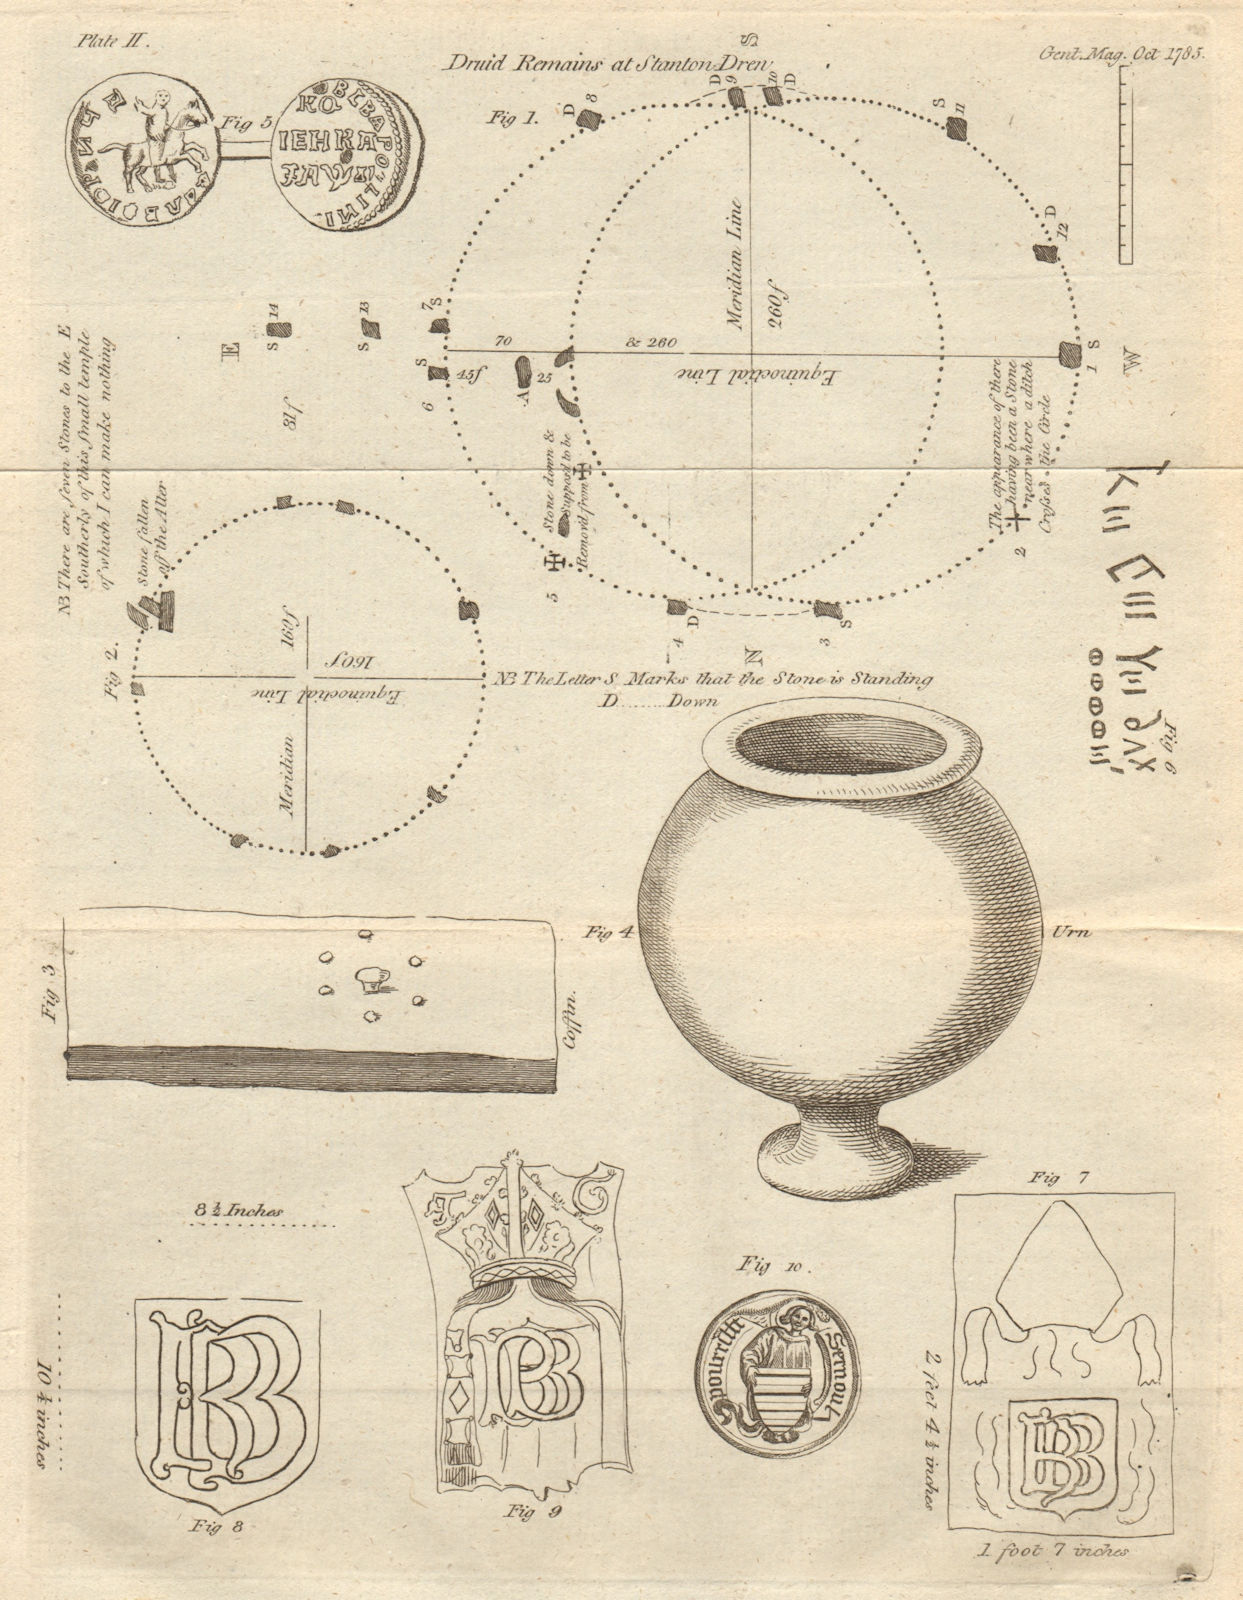 Stanton Drew stone circles. Leicester coffin urn. Richard Beere Glastonbury 1785